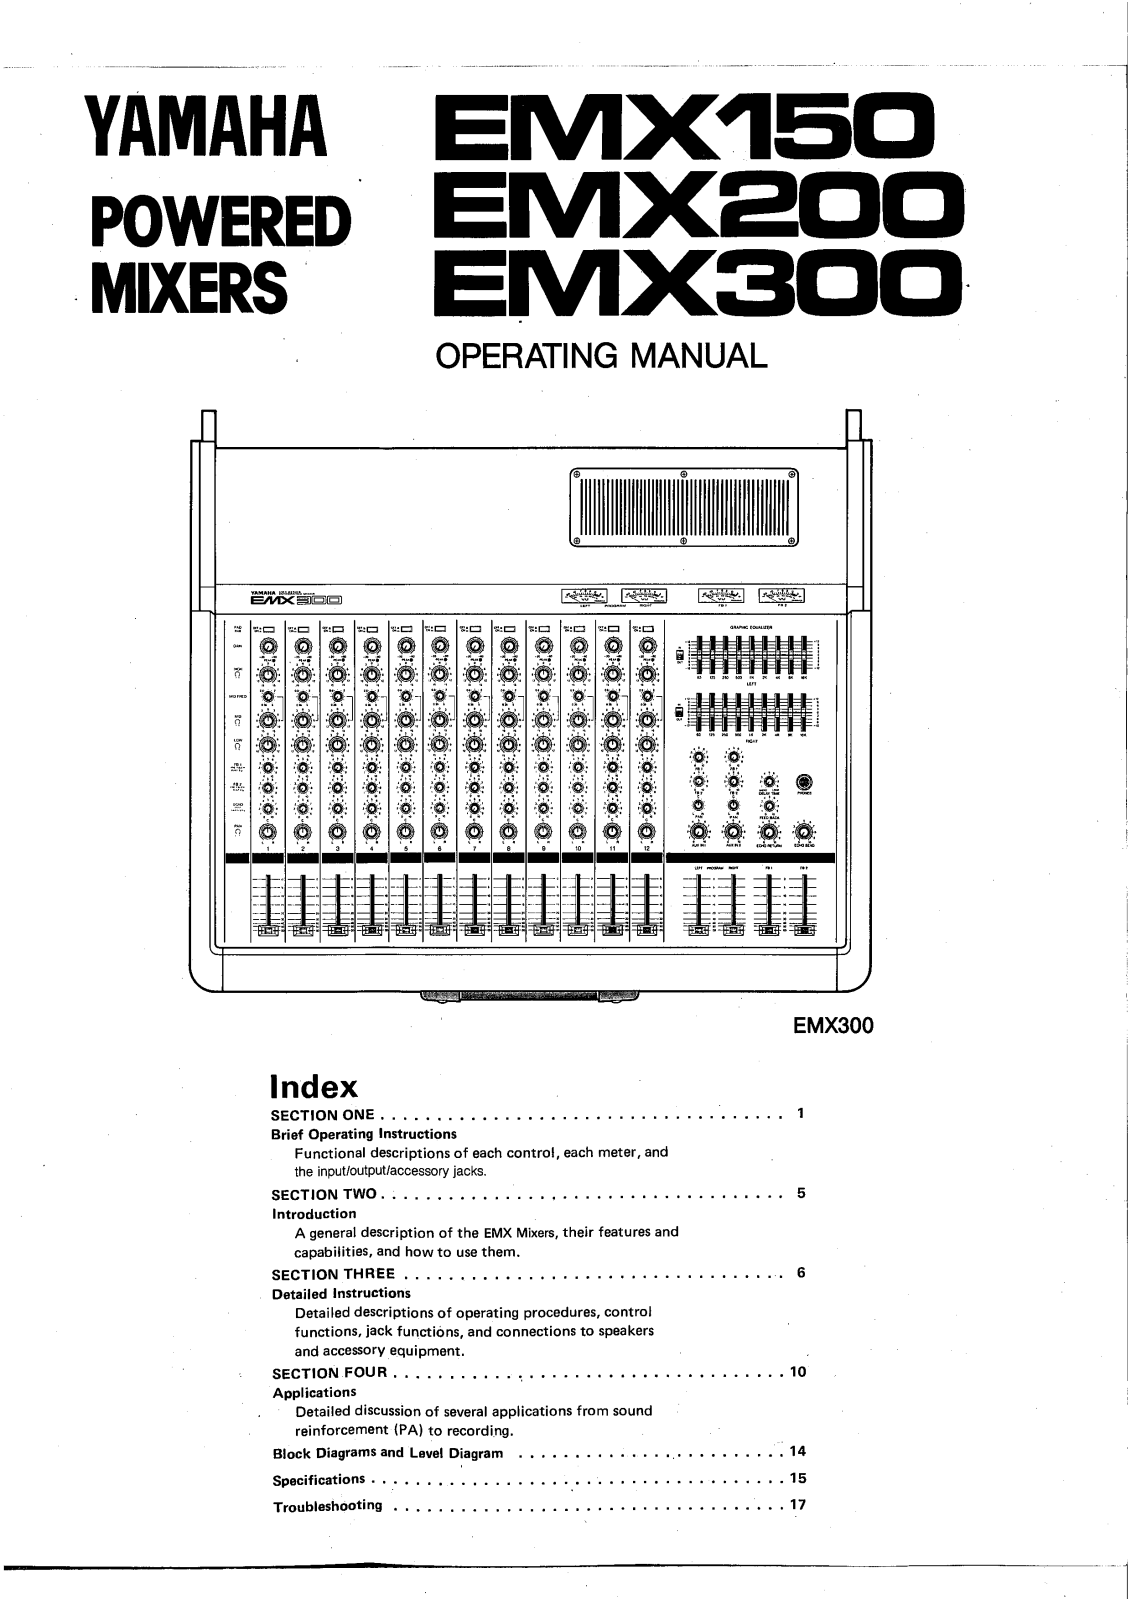 YAMAHA EMX150, EMX200, EMX300 User Manual